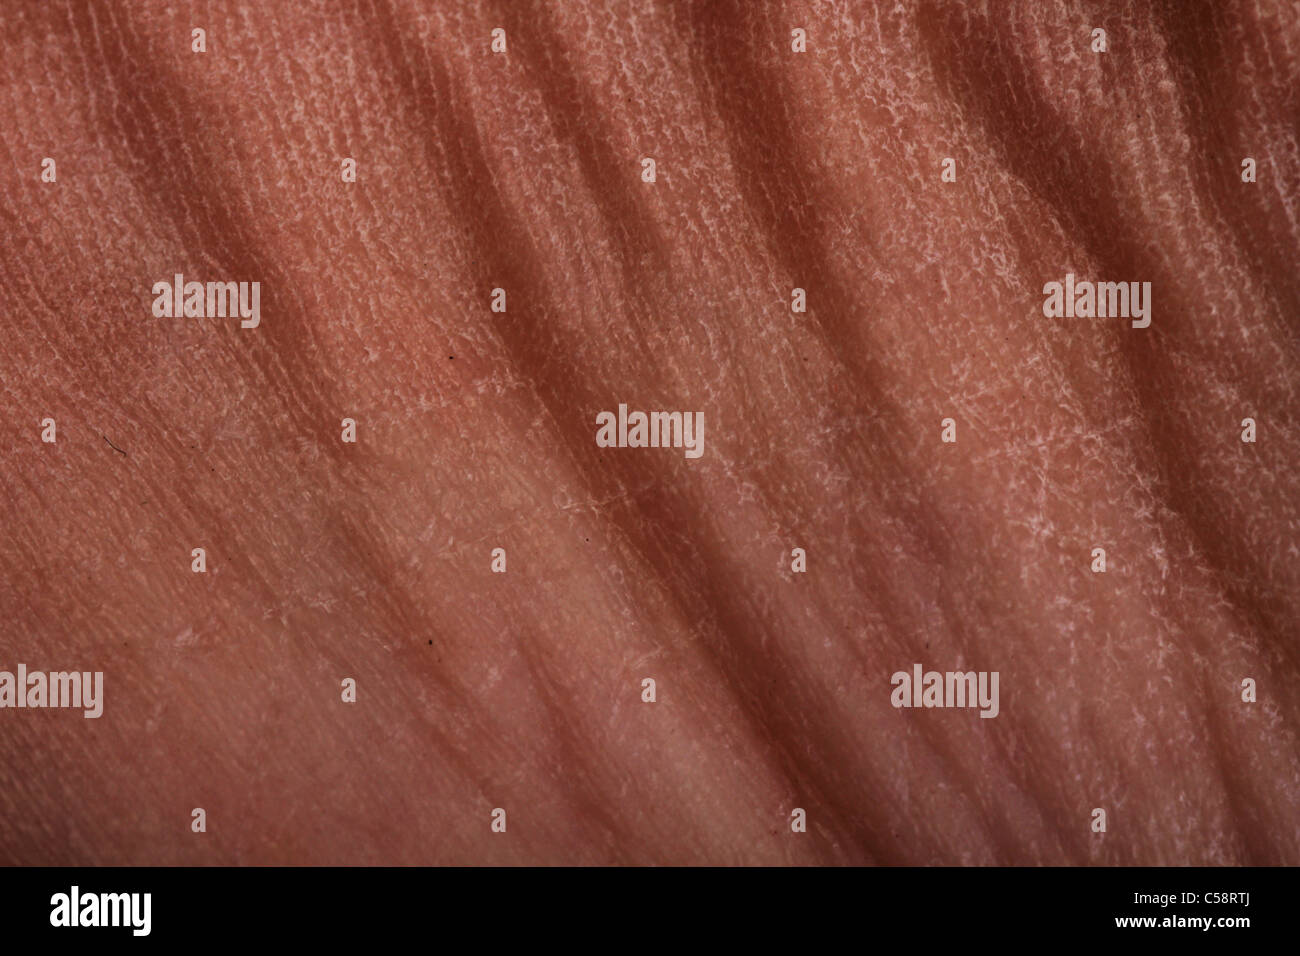 wrinkled human skin Stock Photo